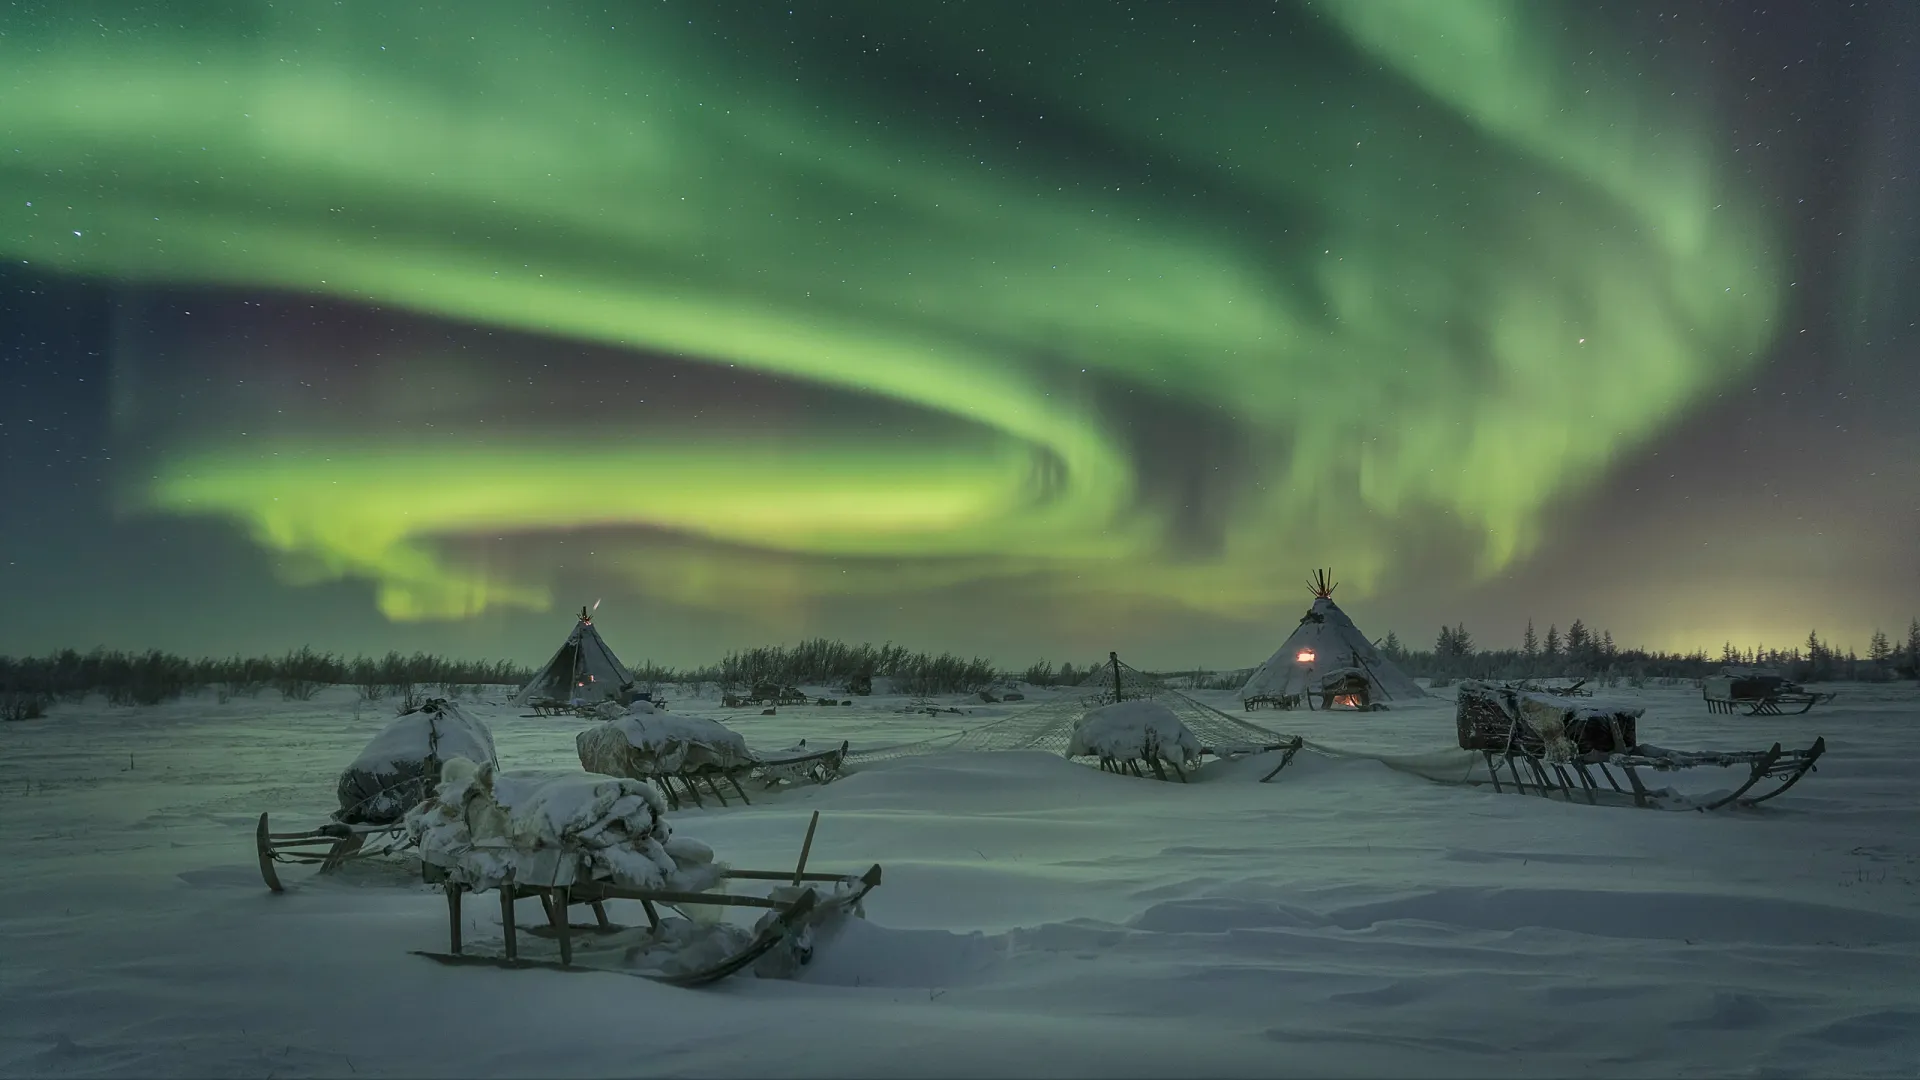 Северное сияние в полярную ночь на Ямале. Фото: V.Timoshenko / Shutterstock / Fotodom